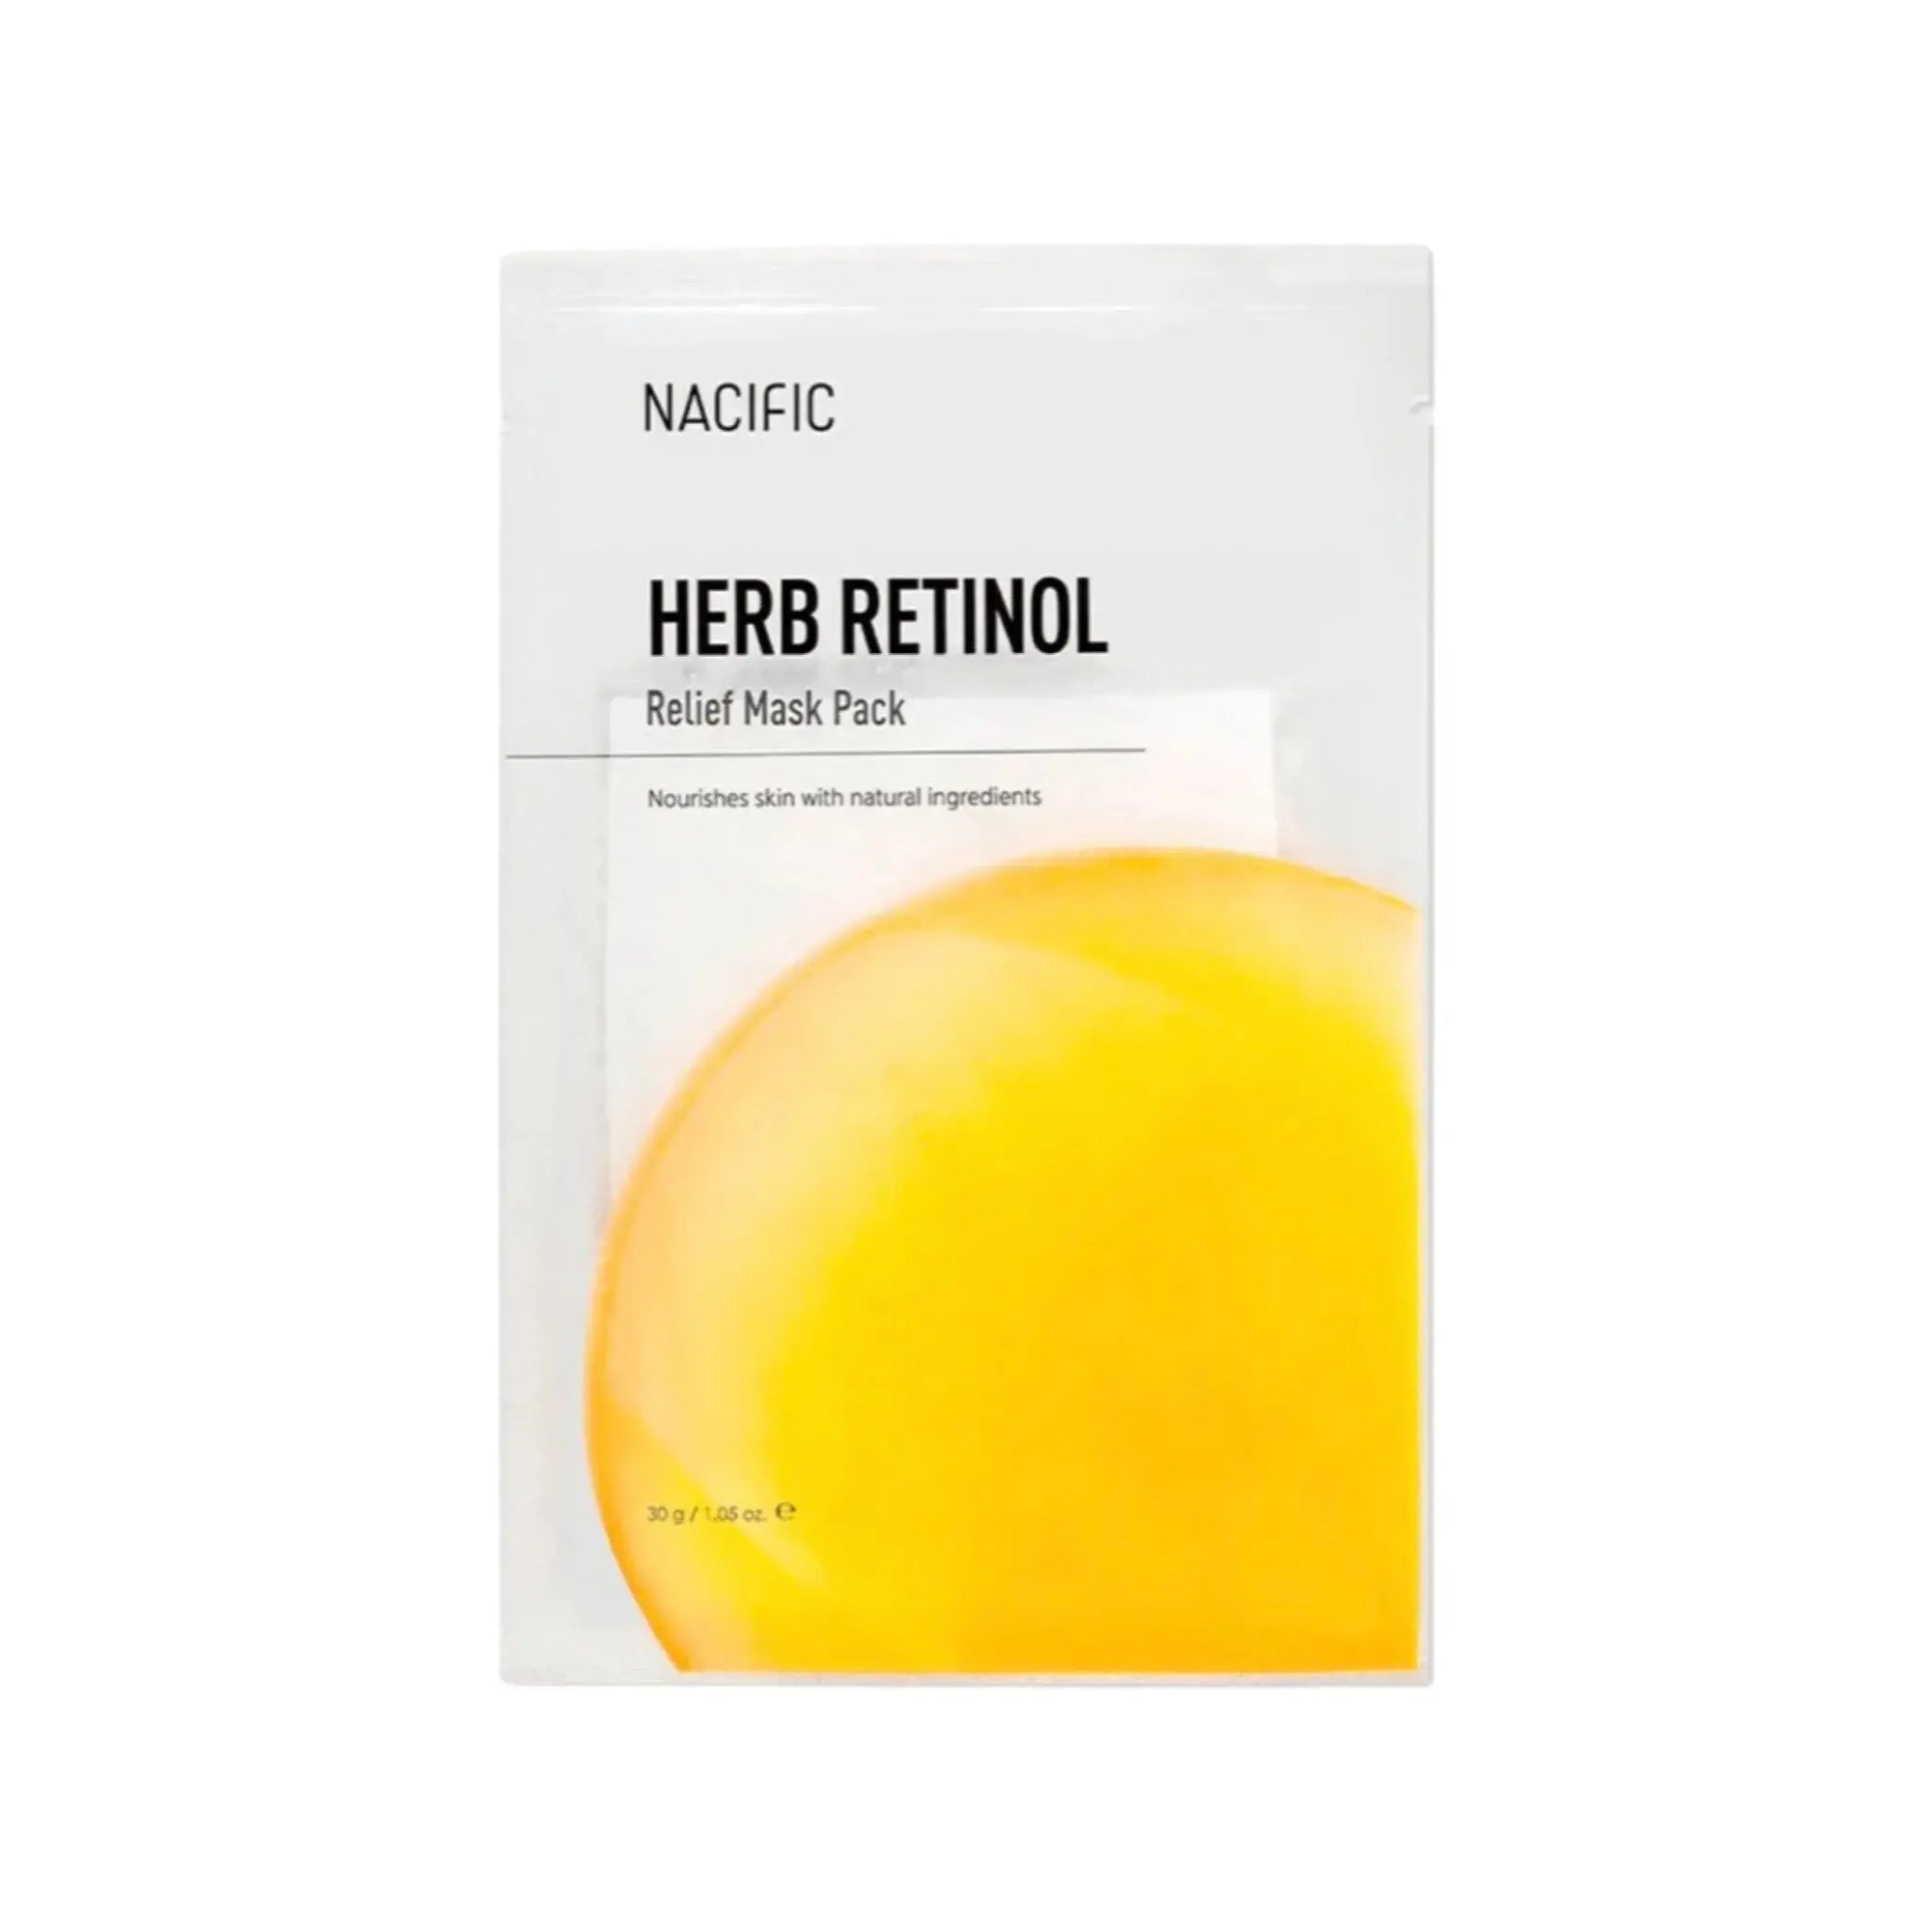 Nacific - Herb Retinol Relief Mask 30g - WanderShop